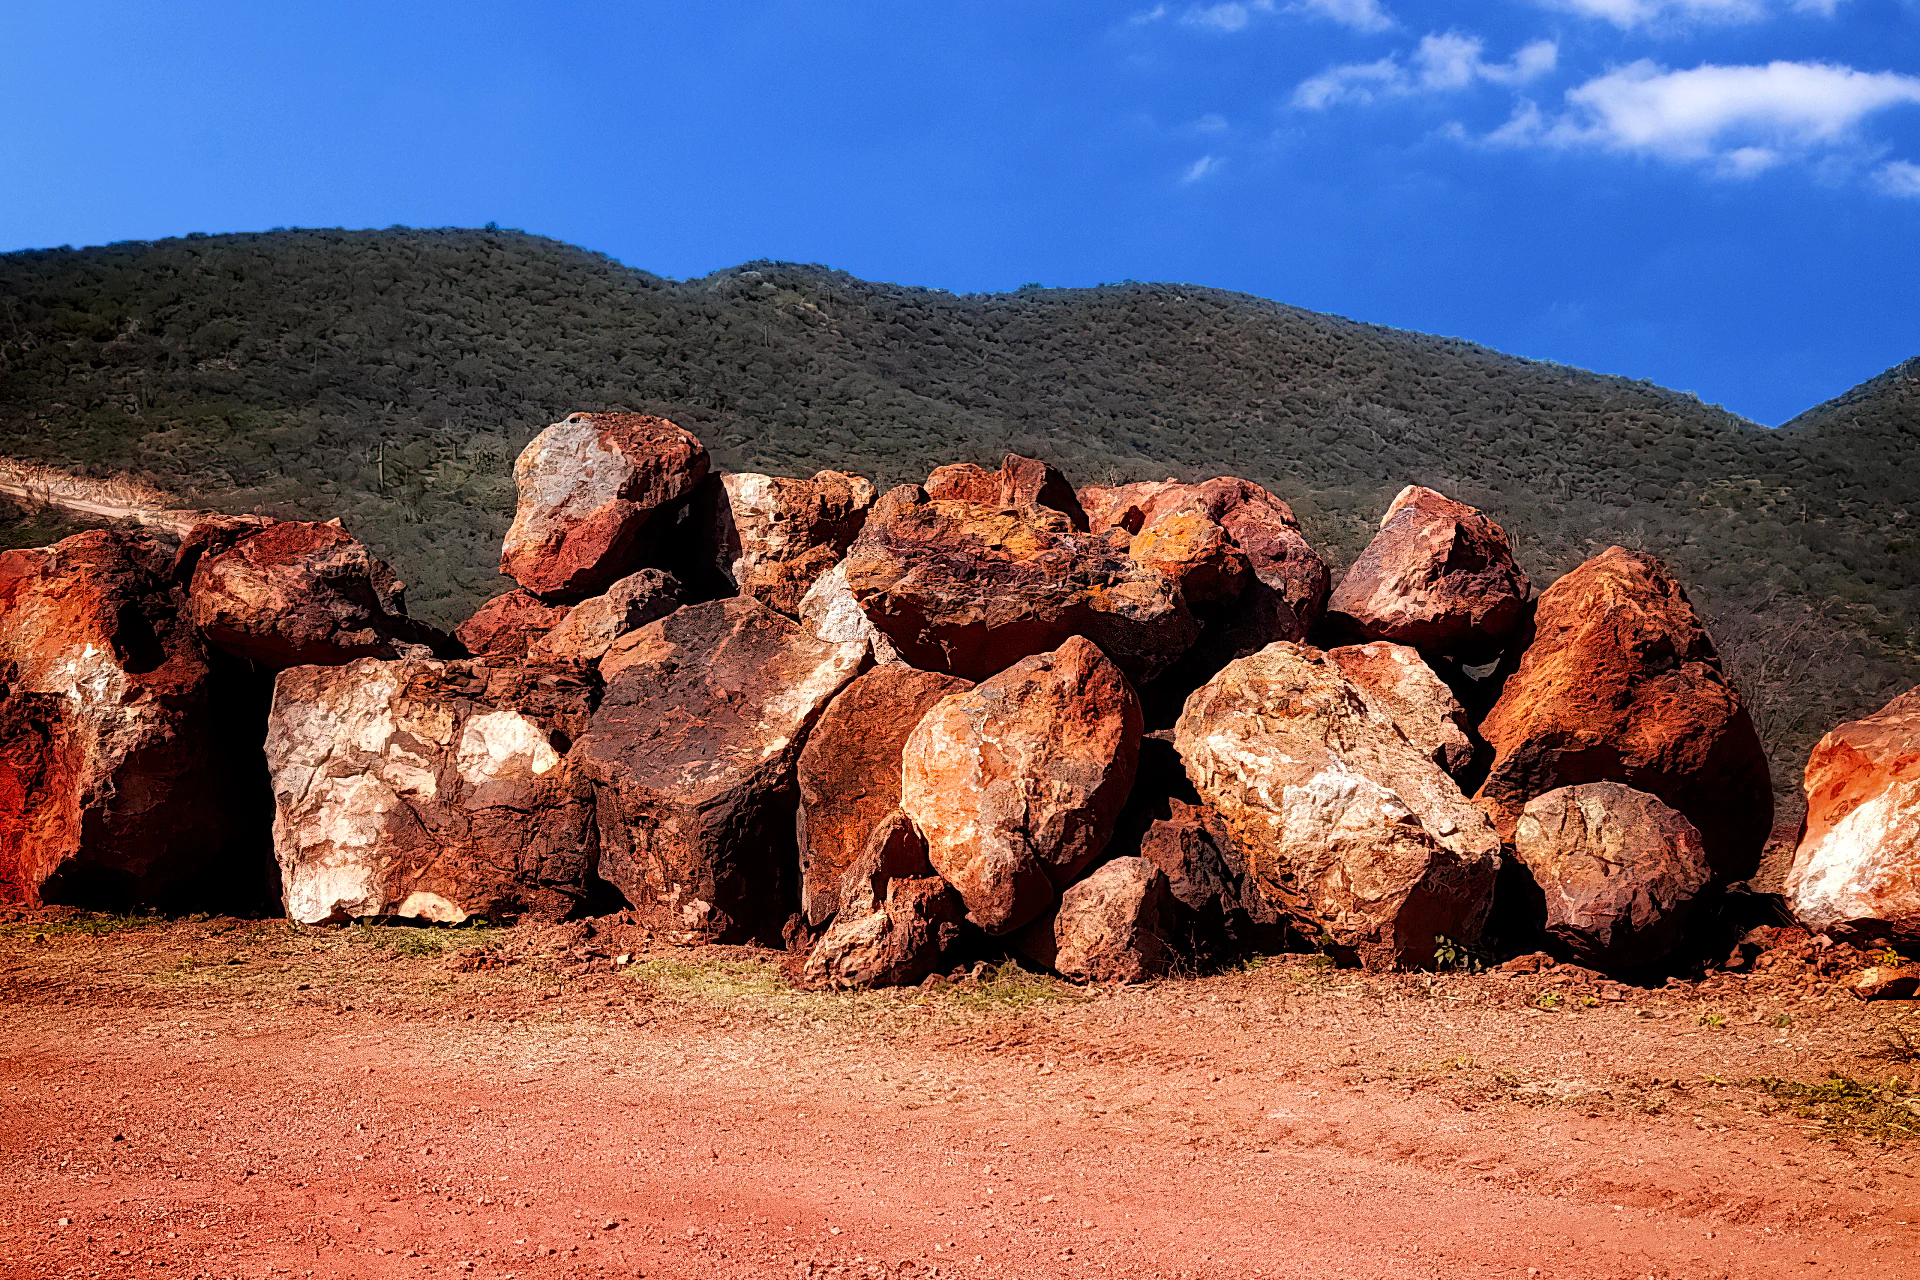 Iron boulders at Leüffer's iron mines